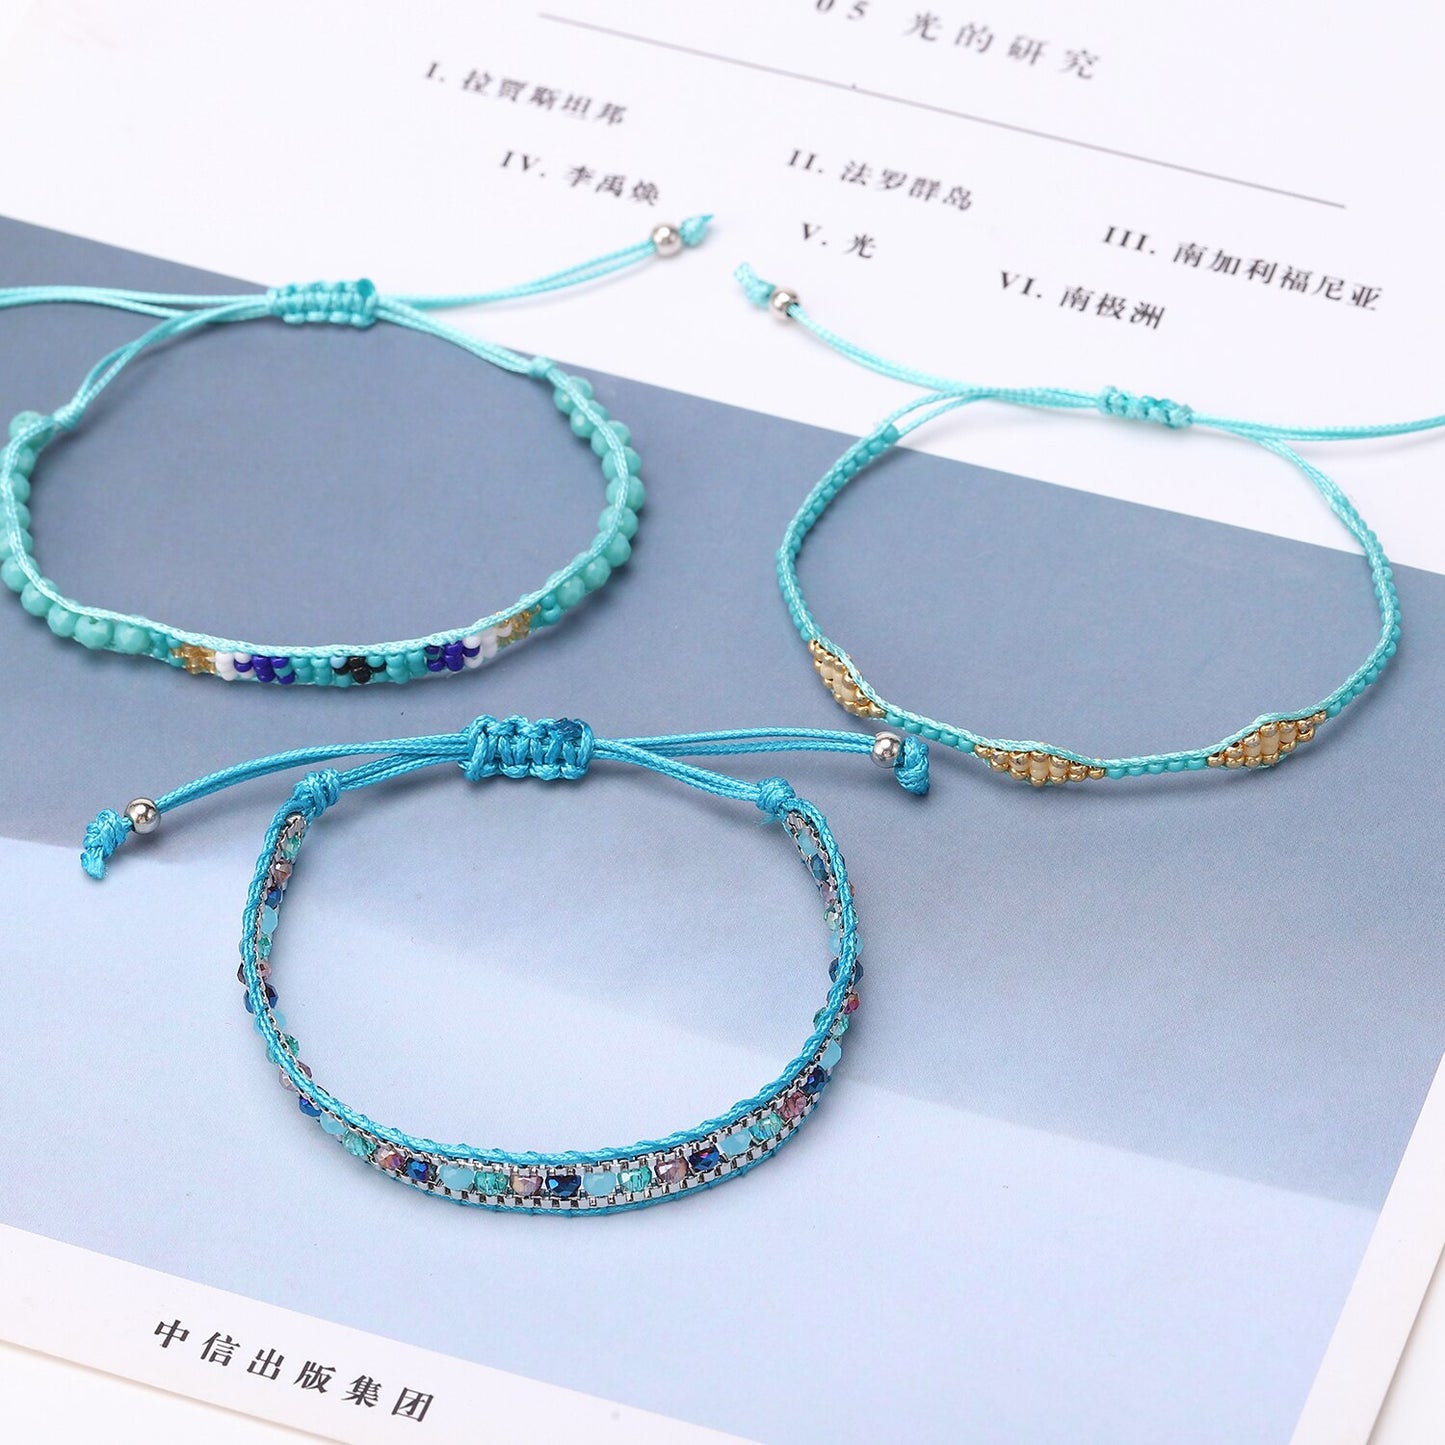 3pcs/lot Bohemia Woman Men Handmade Weave Adjustable Rope Chain Crystal Charms Bracelets Wrap Bracelet Bangle Wristband Jewelry